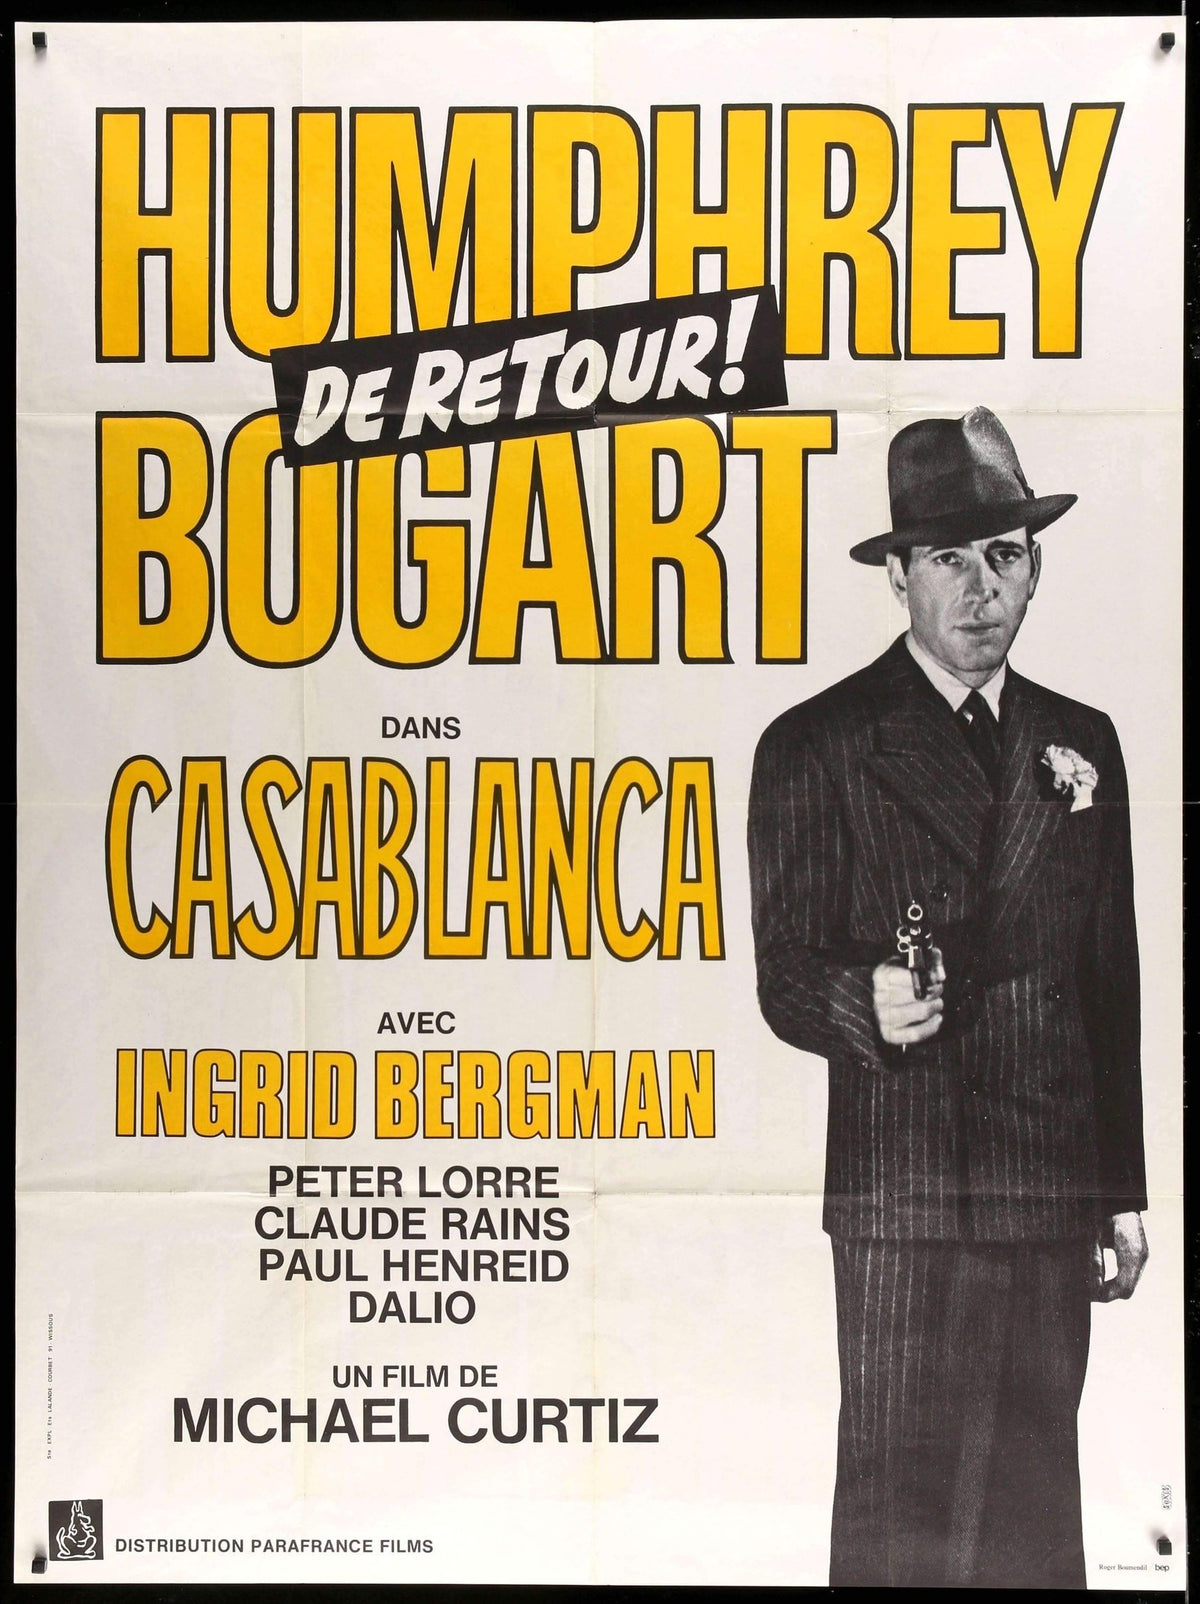 Casablanca (1942) original movie poster for sale at Original Film Art